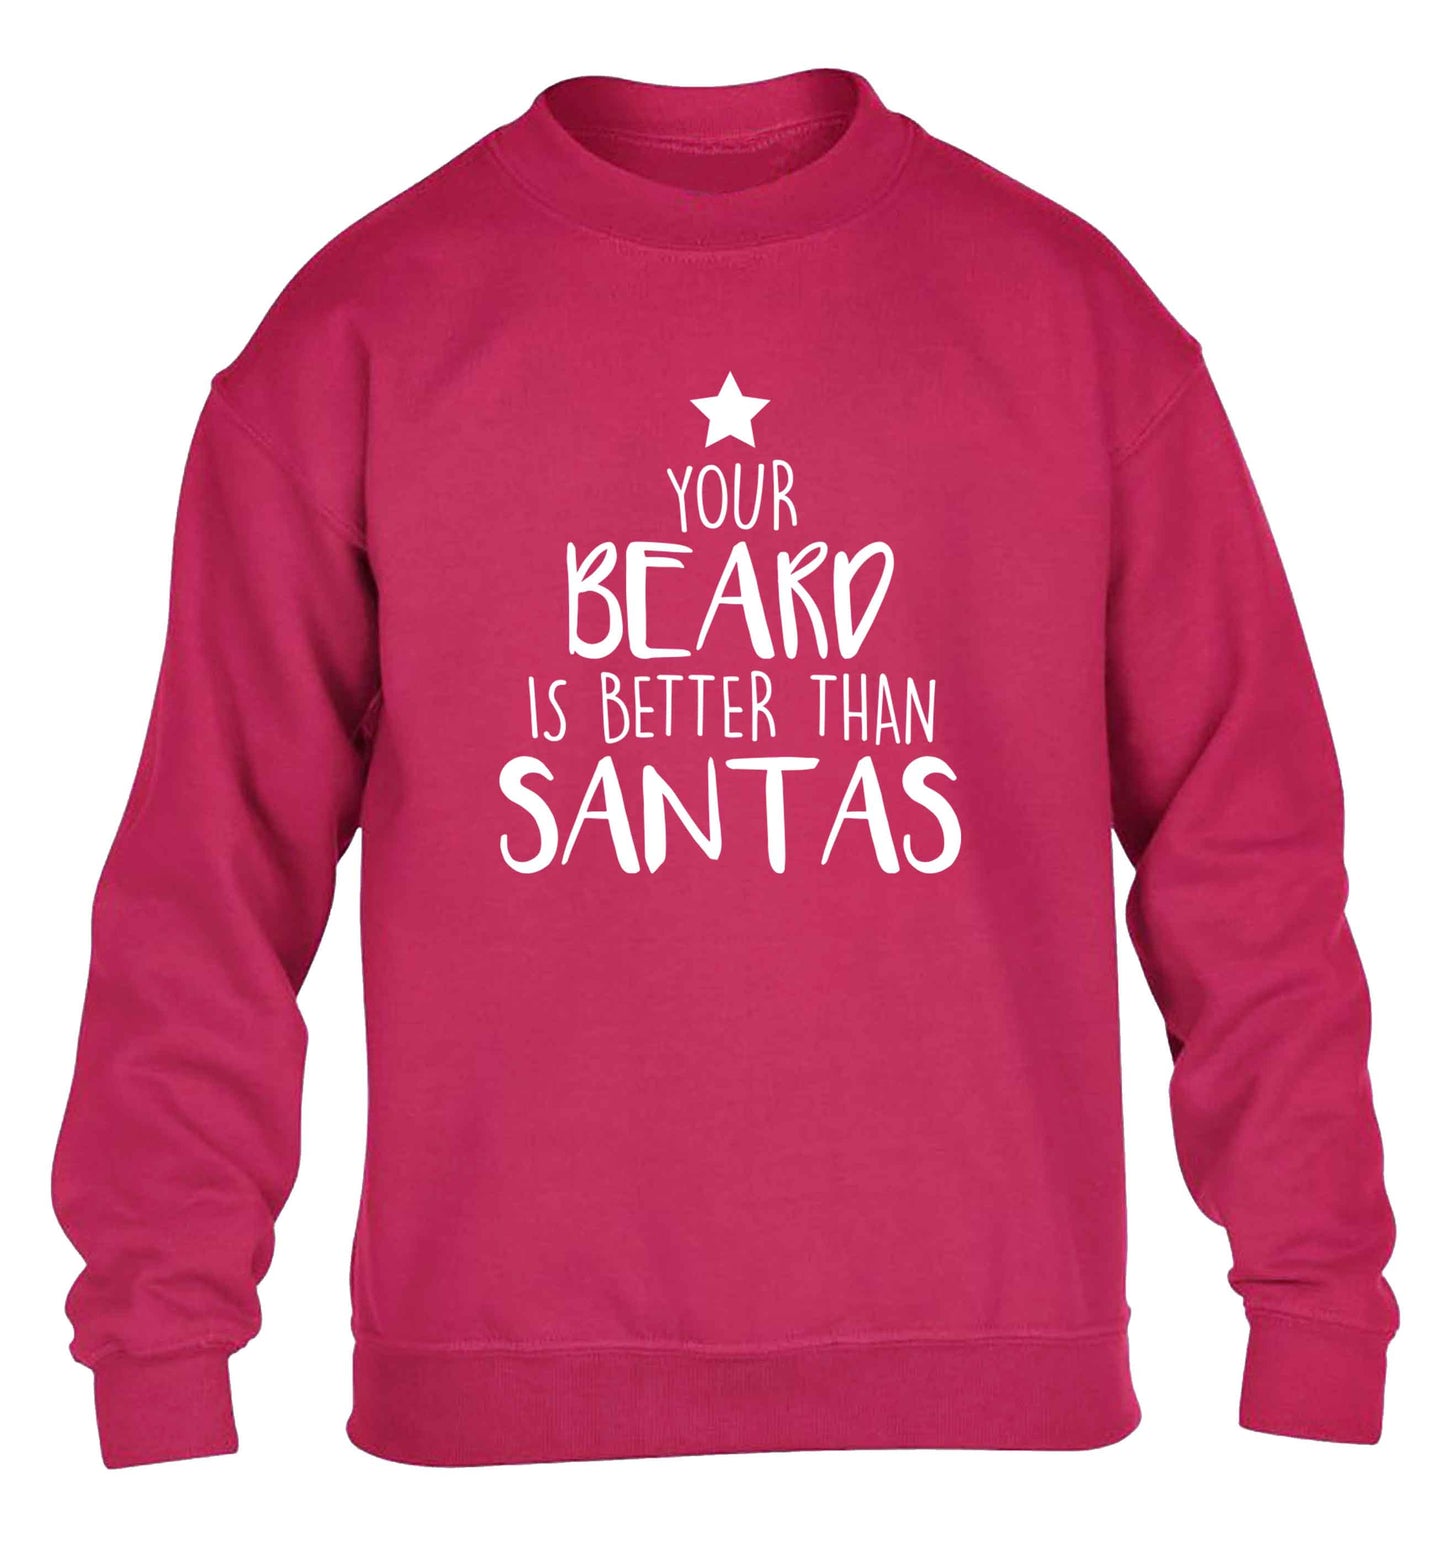 Your Beard Better than Santas children's pink sweater 12-13 Years